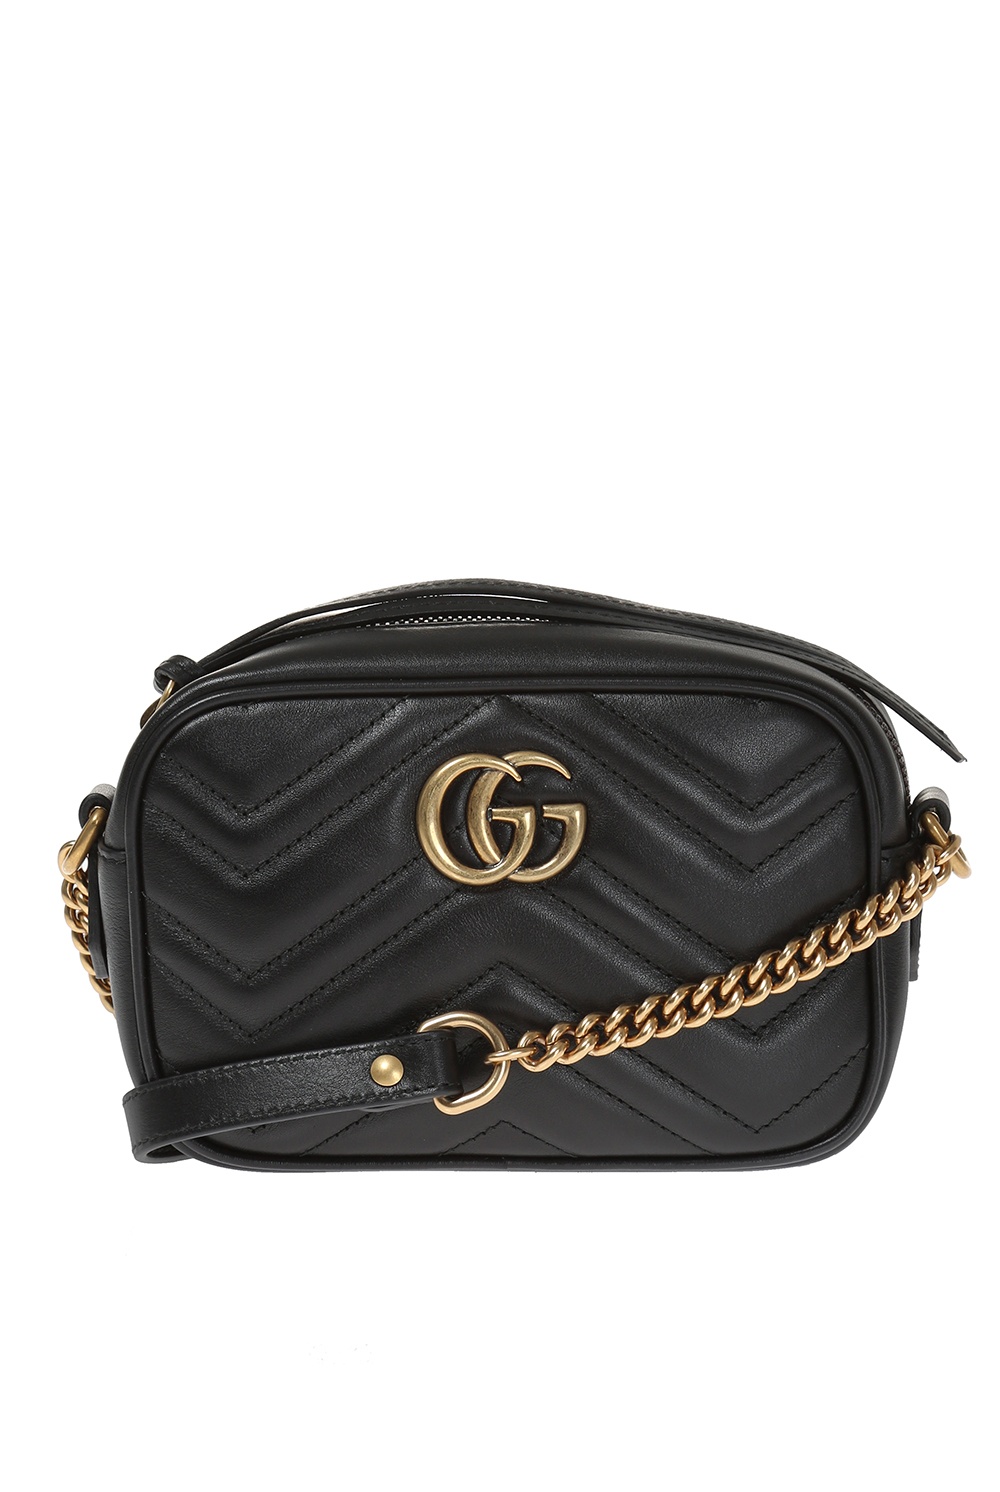 GG Marmont' shoulder bag Gucci - Vitkac TW